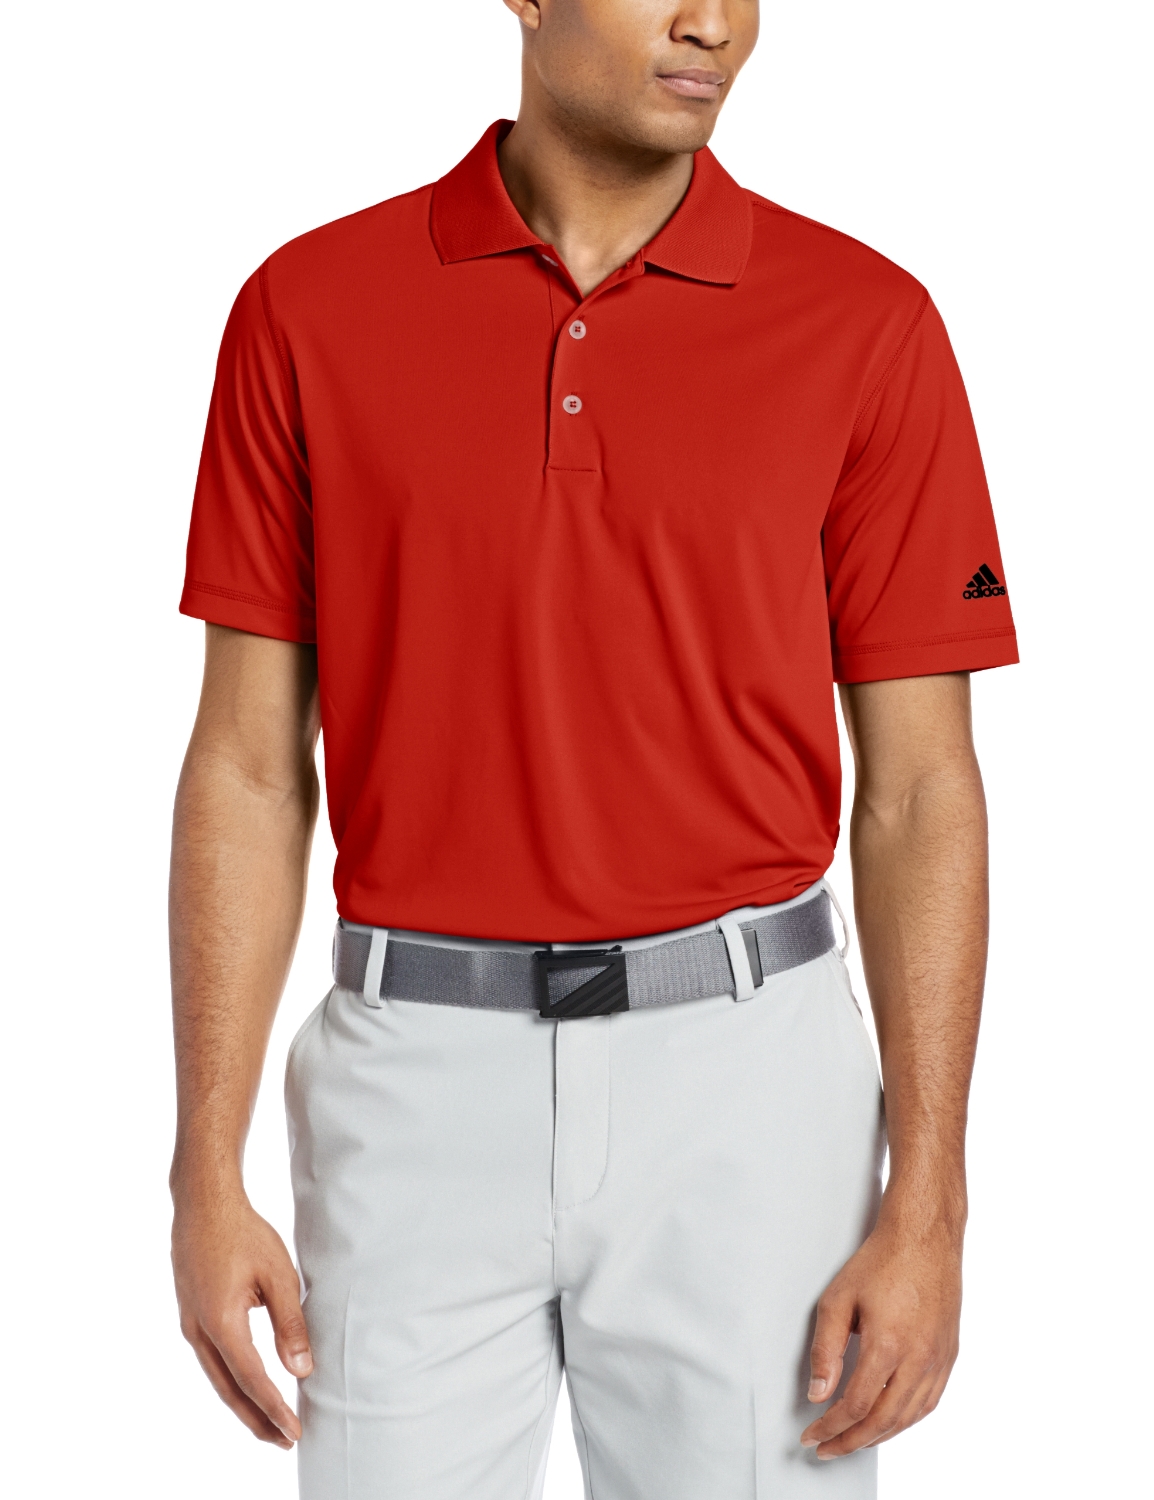 Adidas Mens Puremotion Solid Jersey Golf Shirts